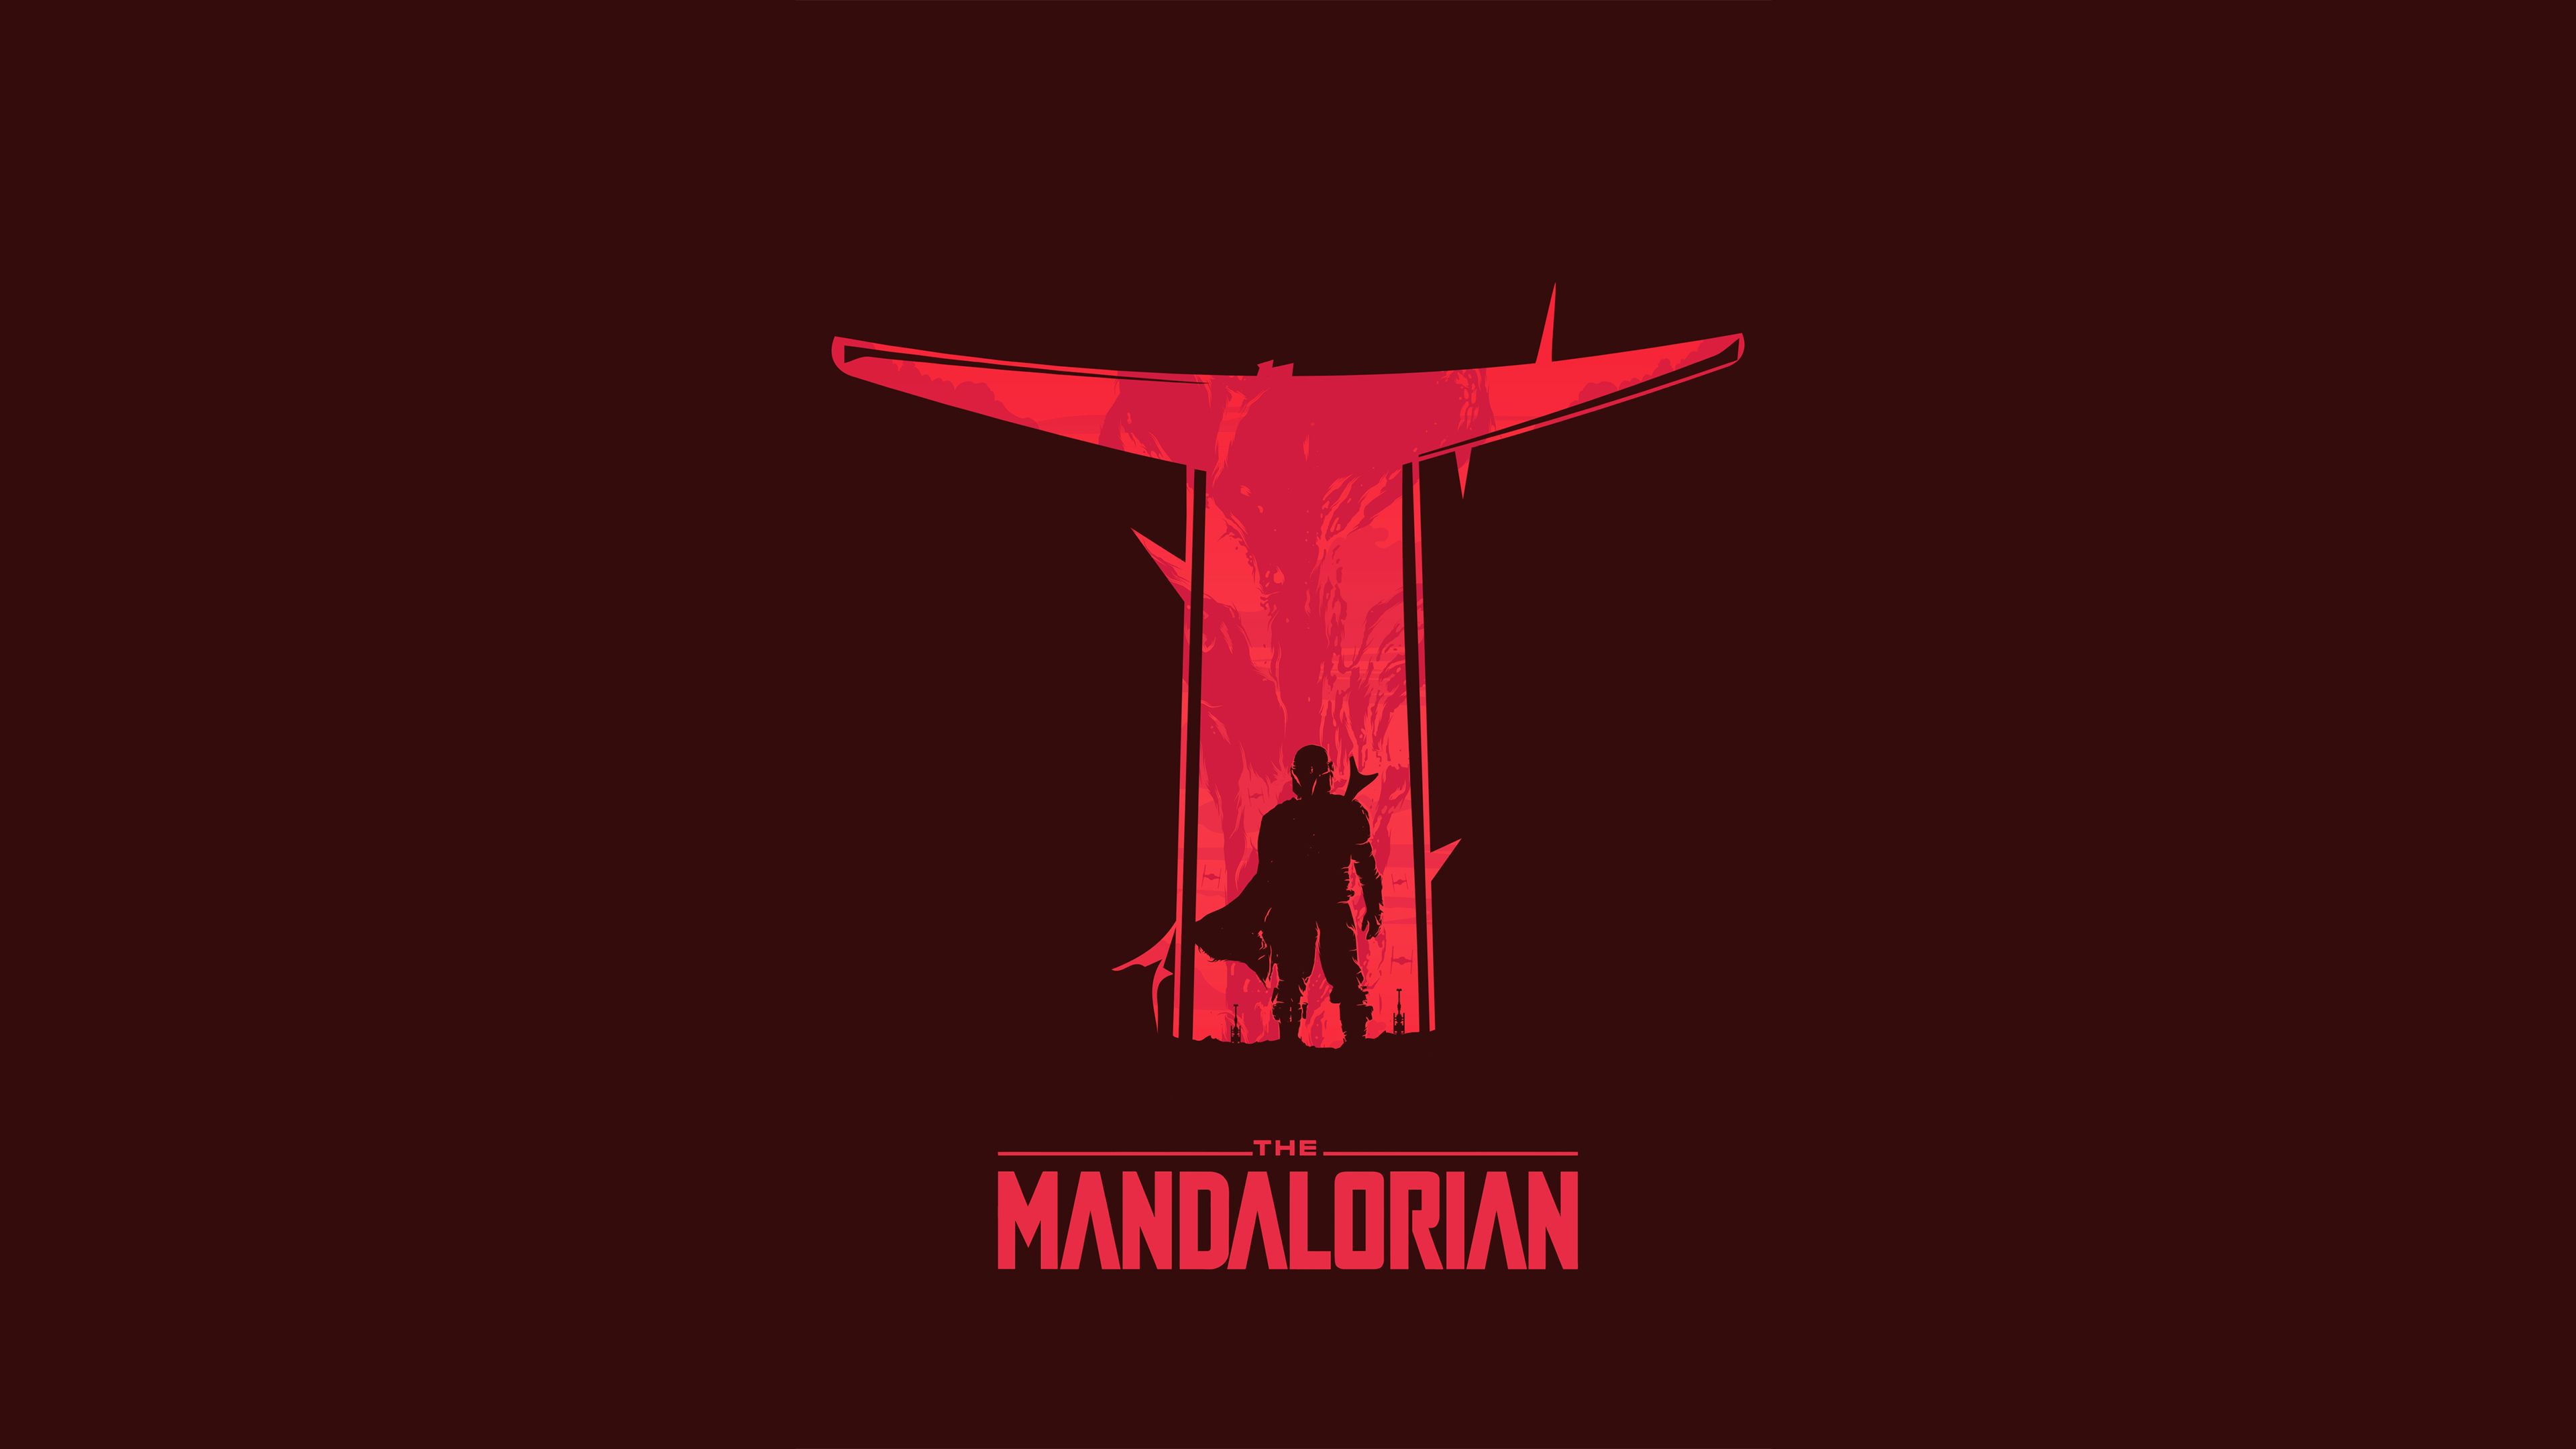 The Mandalorian Minimalist Wallpaper, HD TV Series 4K Wallpaper, Image, Photo and Background